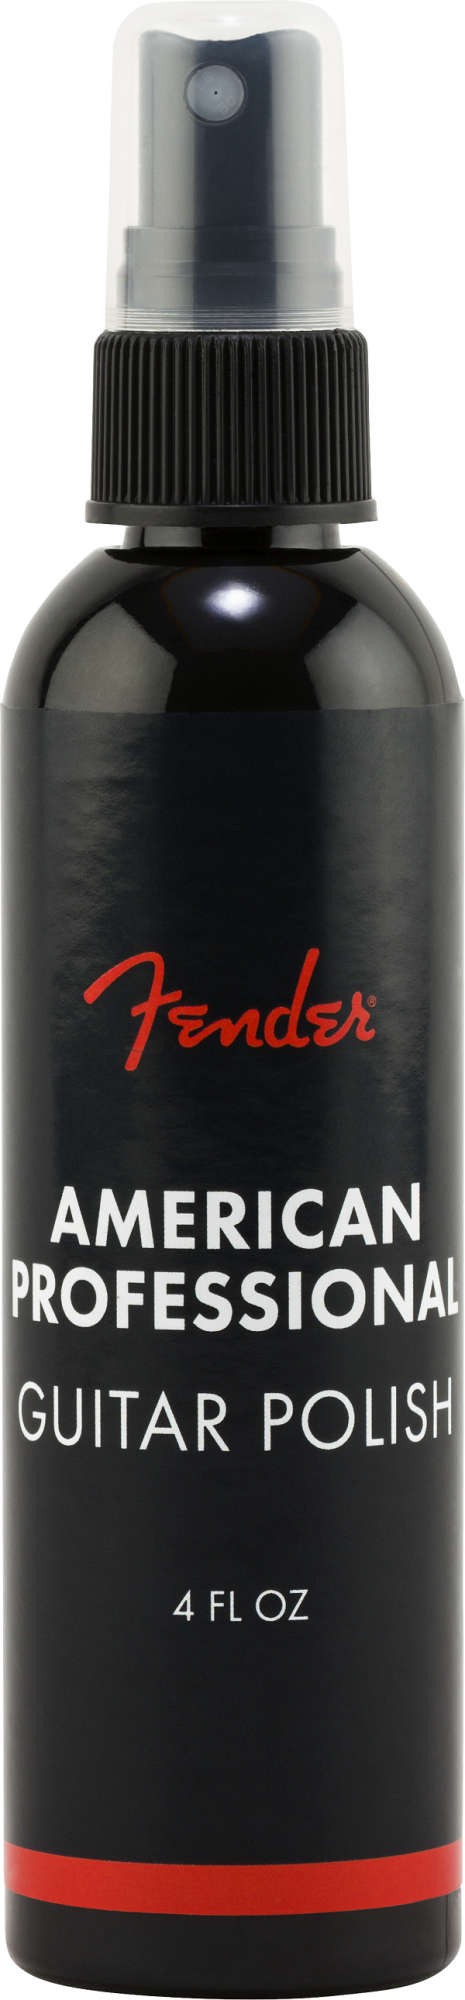 fender-am-pro-guitar-polish-1711008228.png